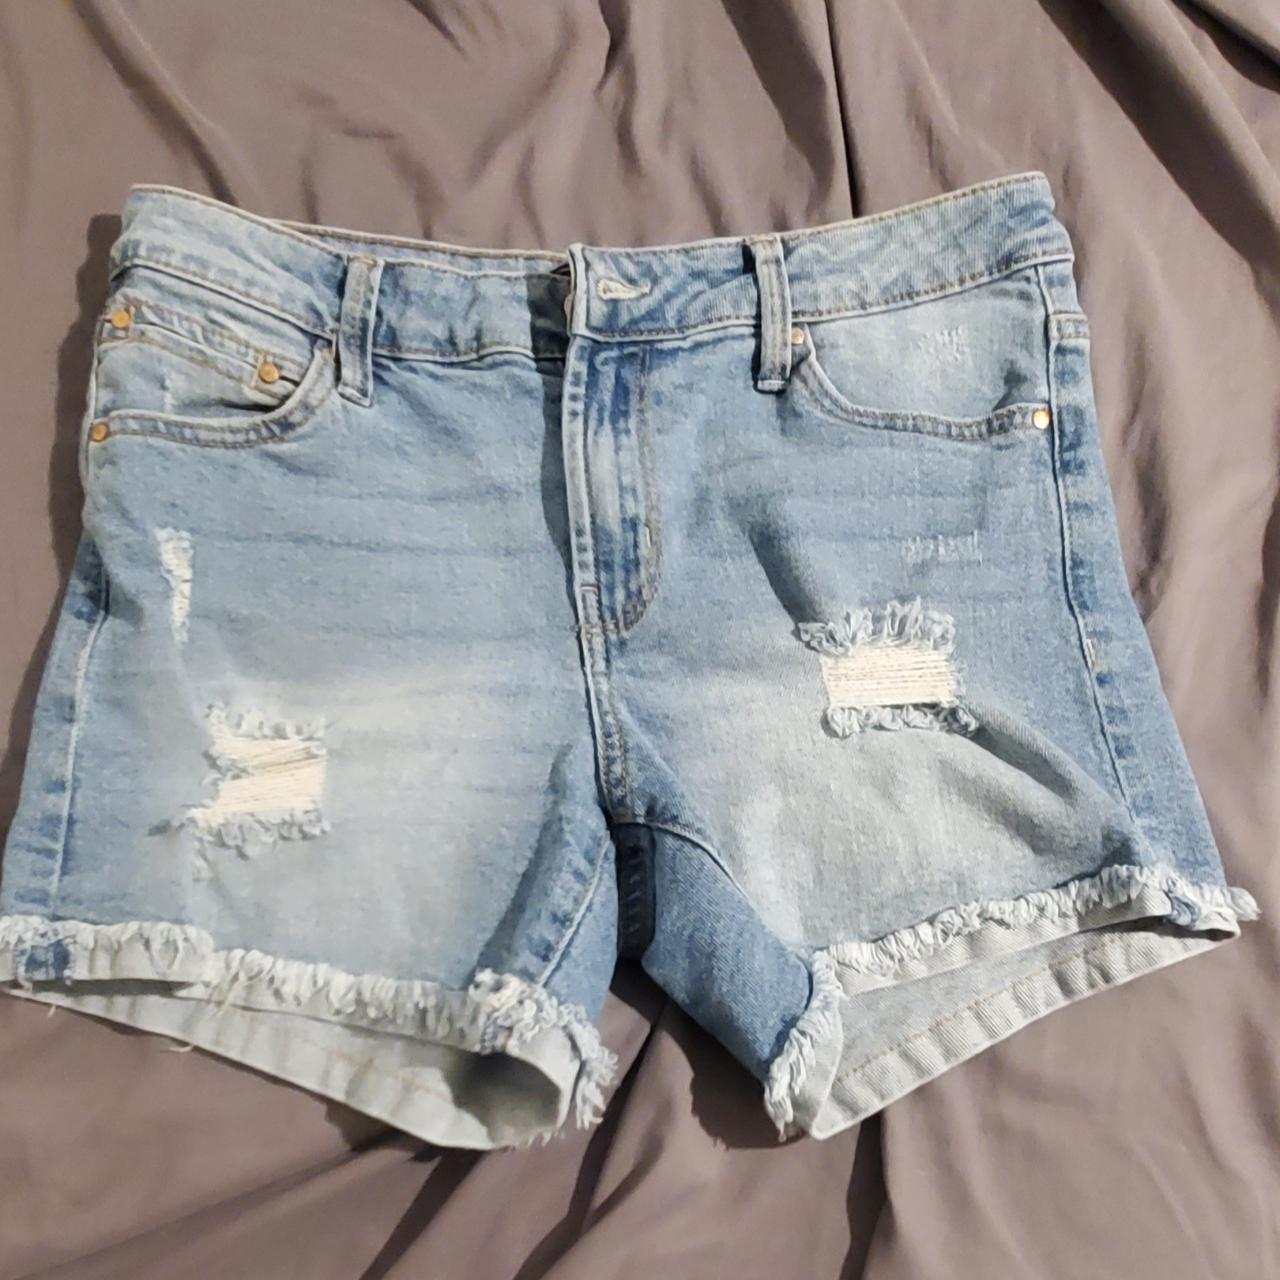 Ripped jean shorts - Depop